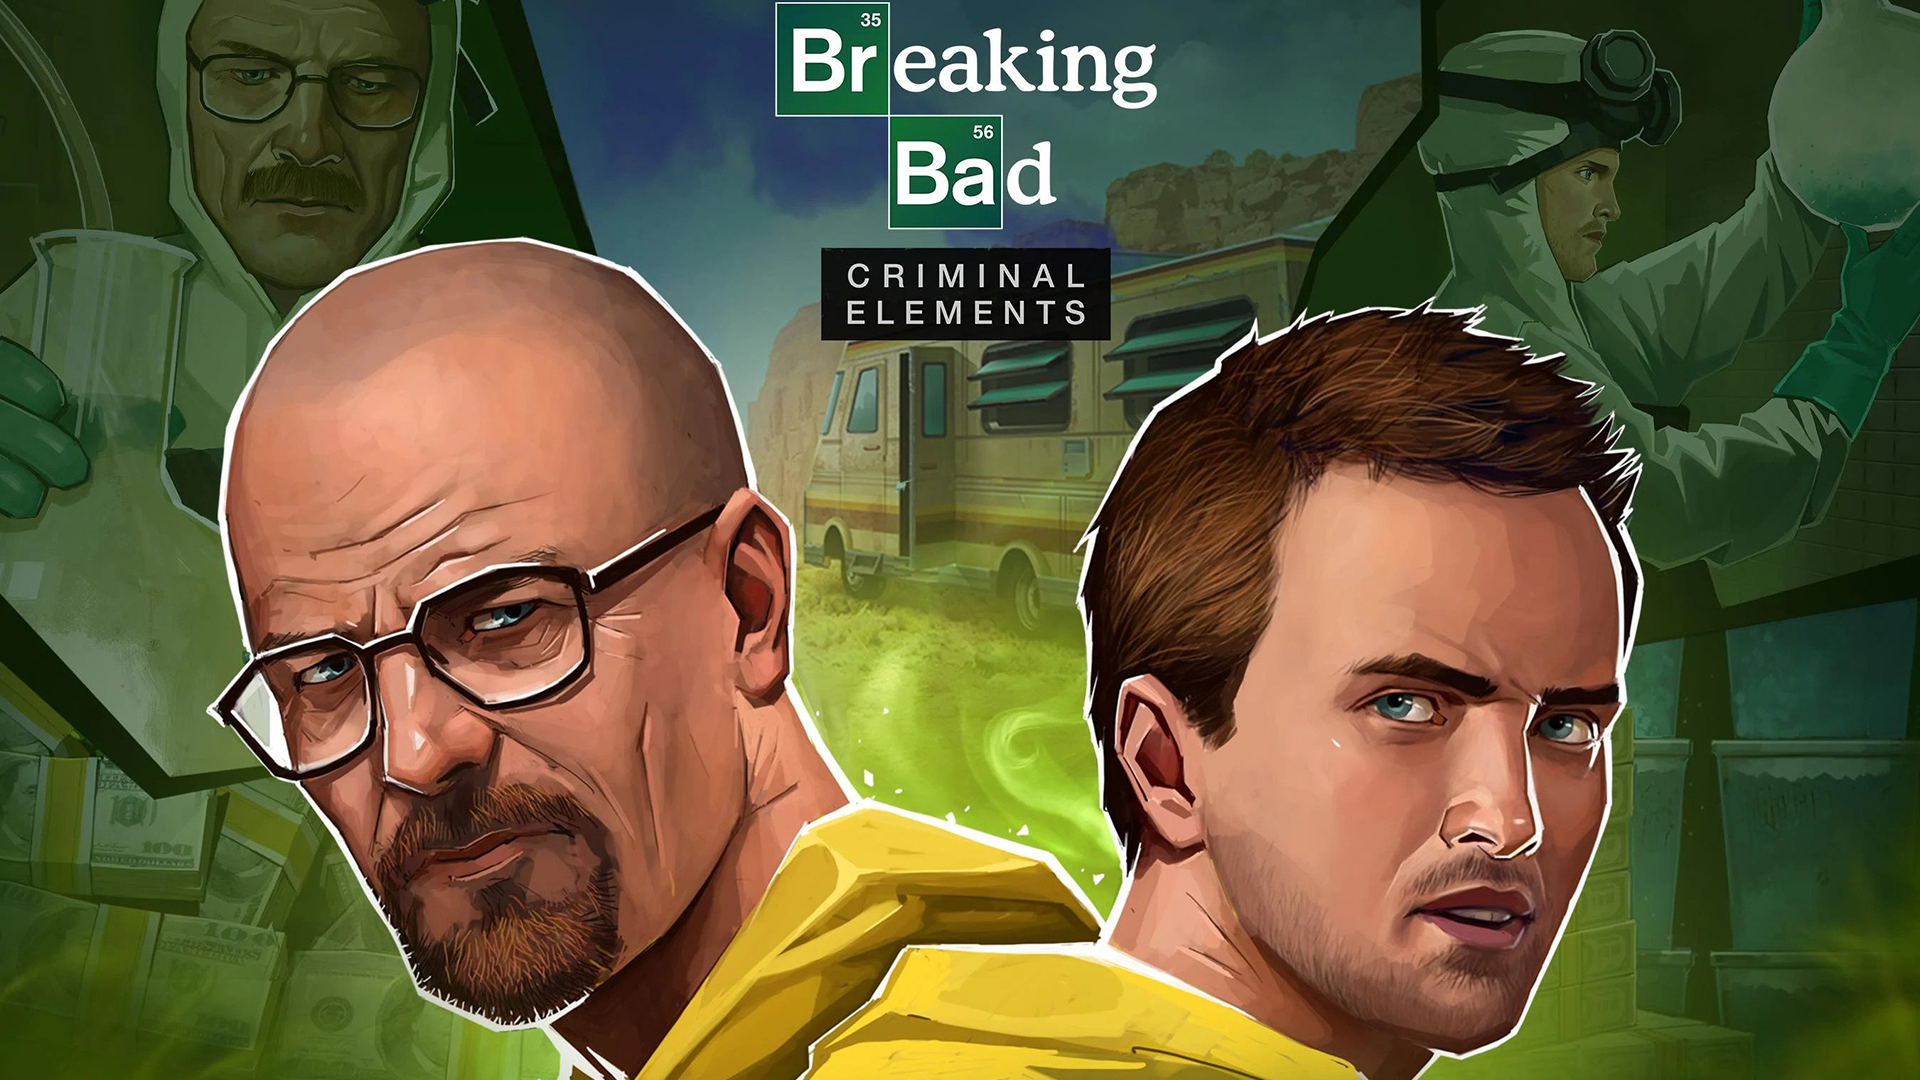 Breaking elements. Breaking Bad игра. Breaking Bad Criminal elements. Breaking Bad Jesse and Walter. Breaking Bad игра на ПК.